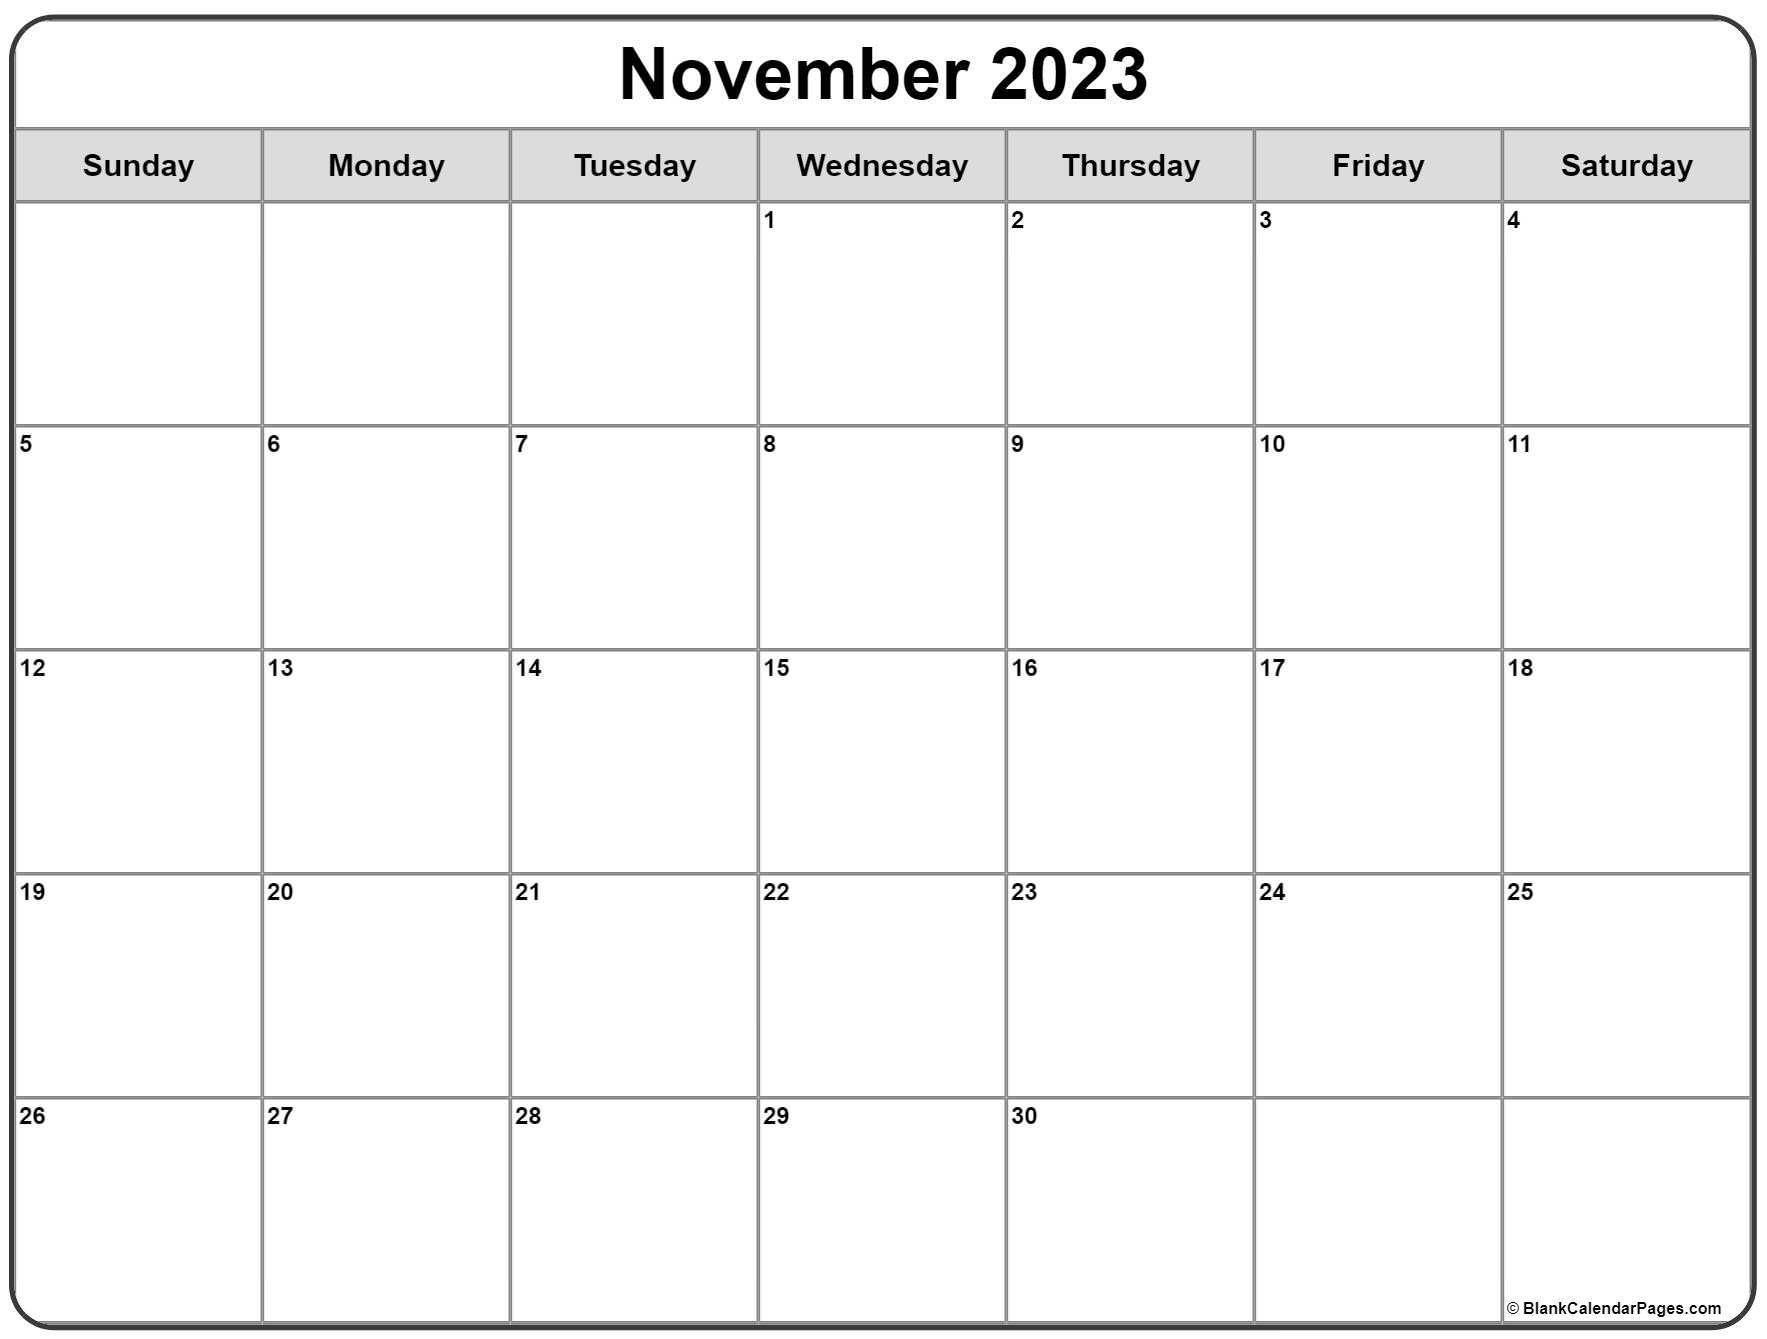 November 2023 calendar free printable calendar